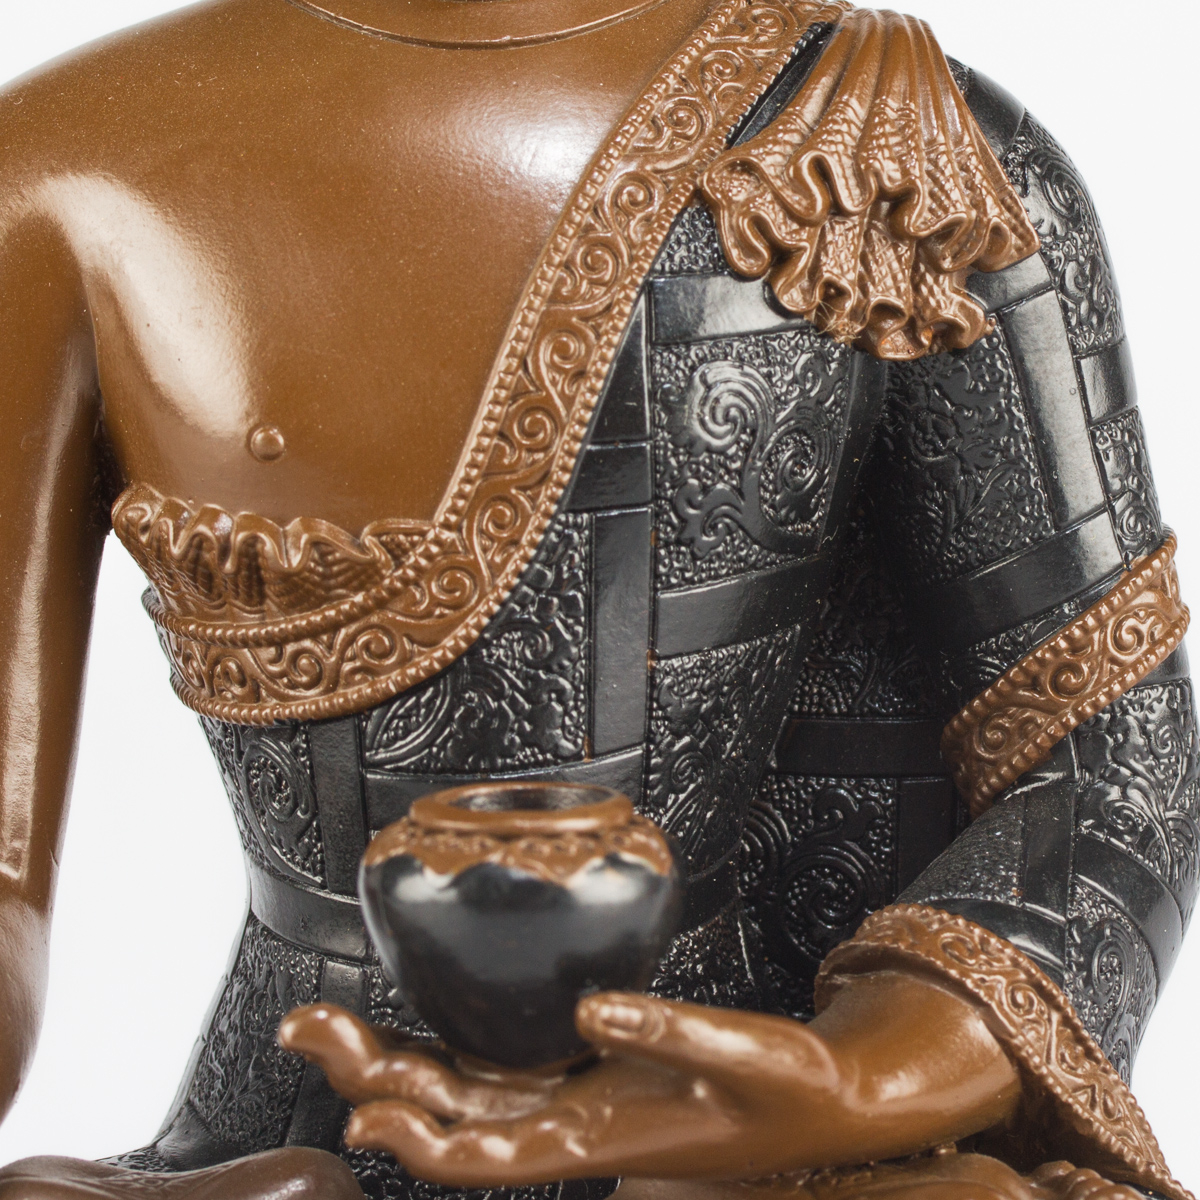 Статуэтка Будды Шакьямуни (бхумиспарша-мудра), 16,5 см, черно-коричневая